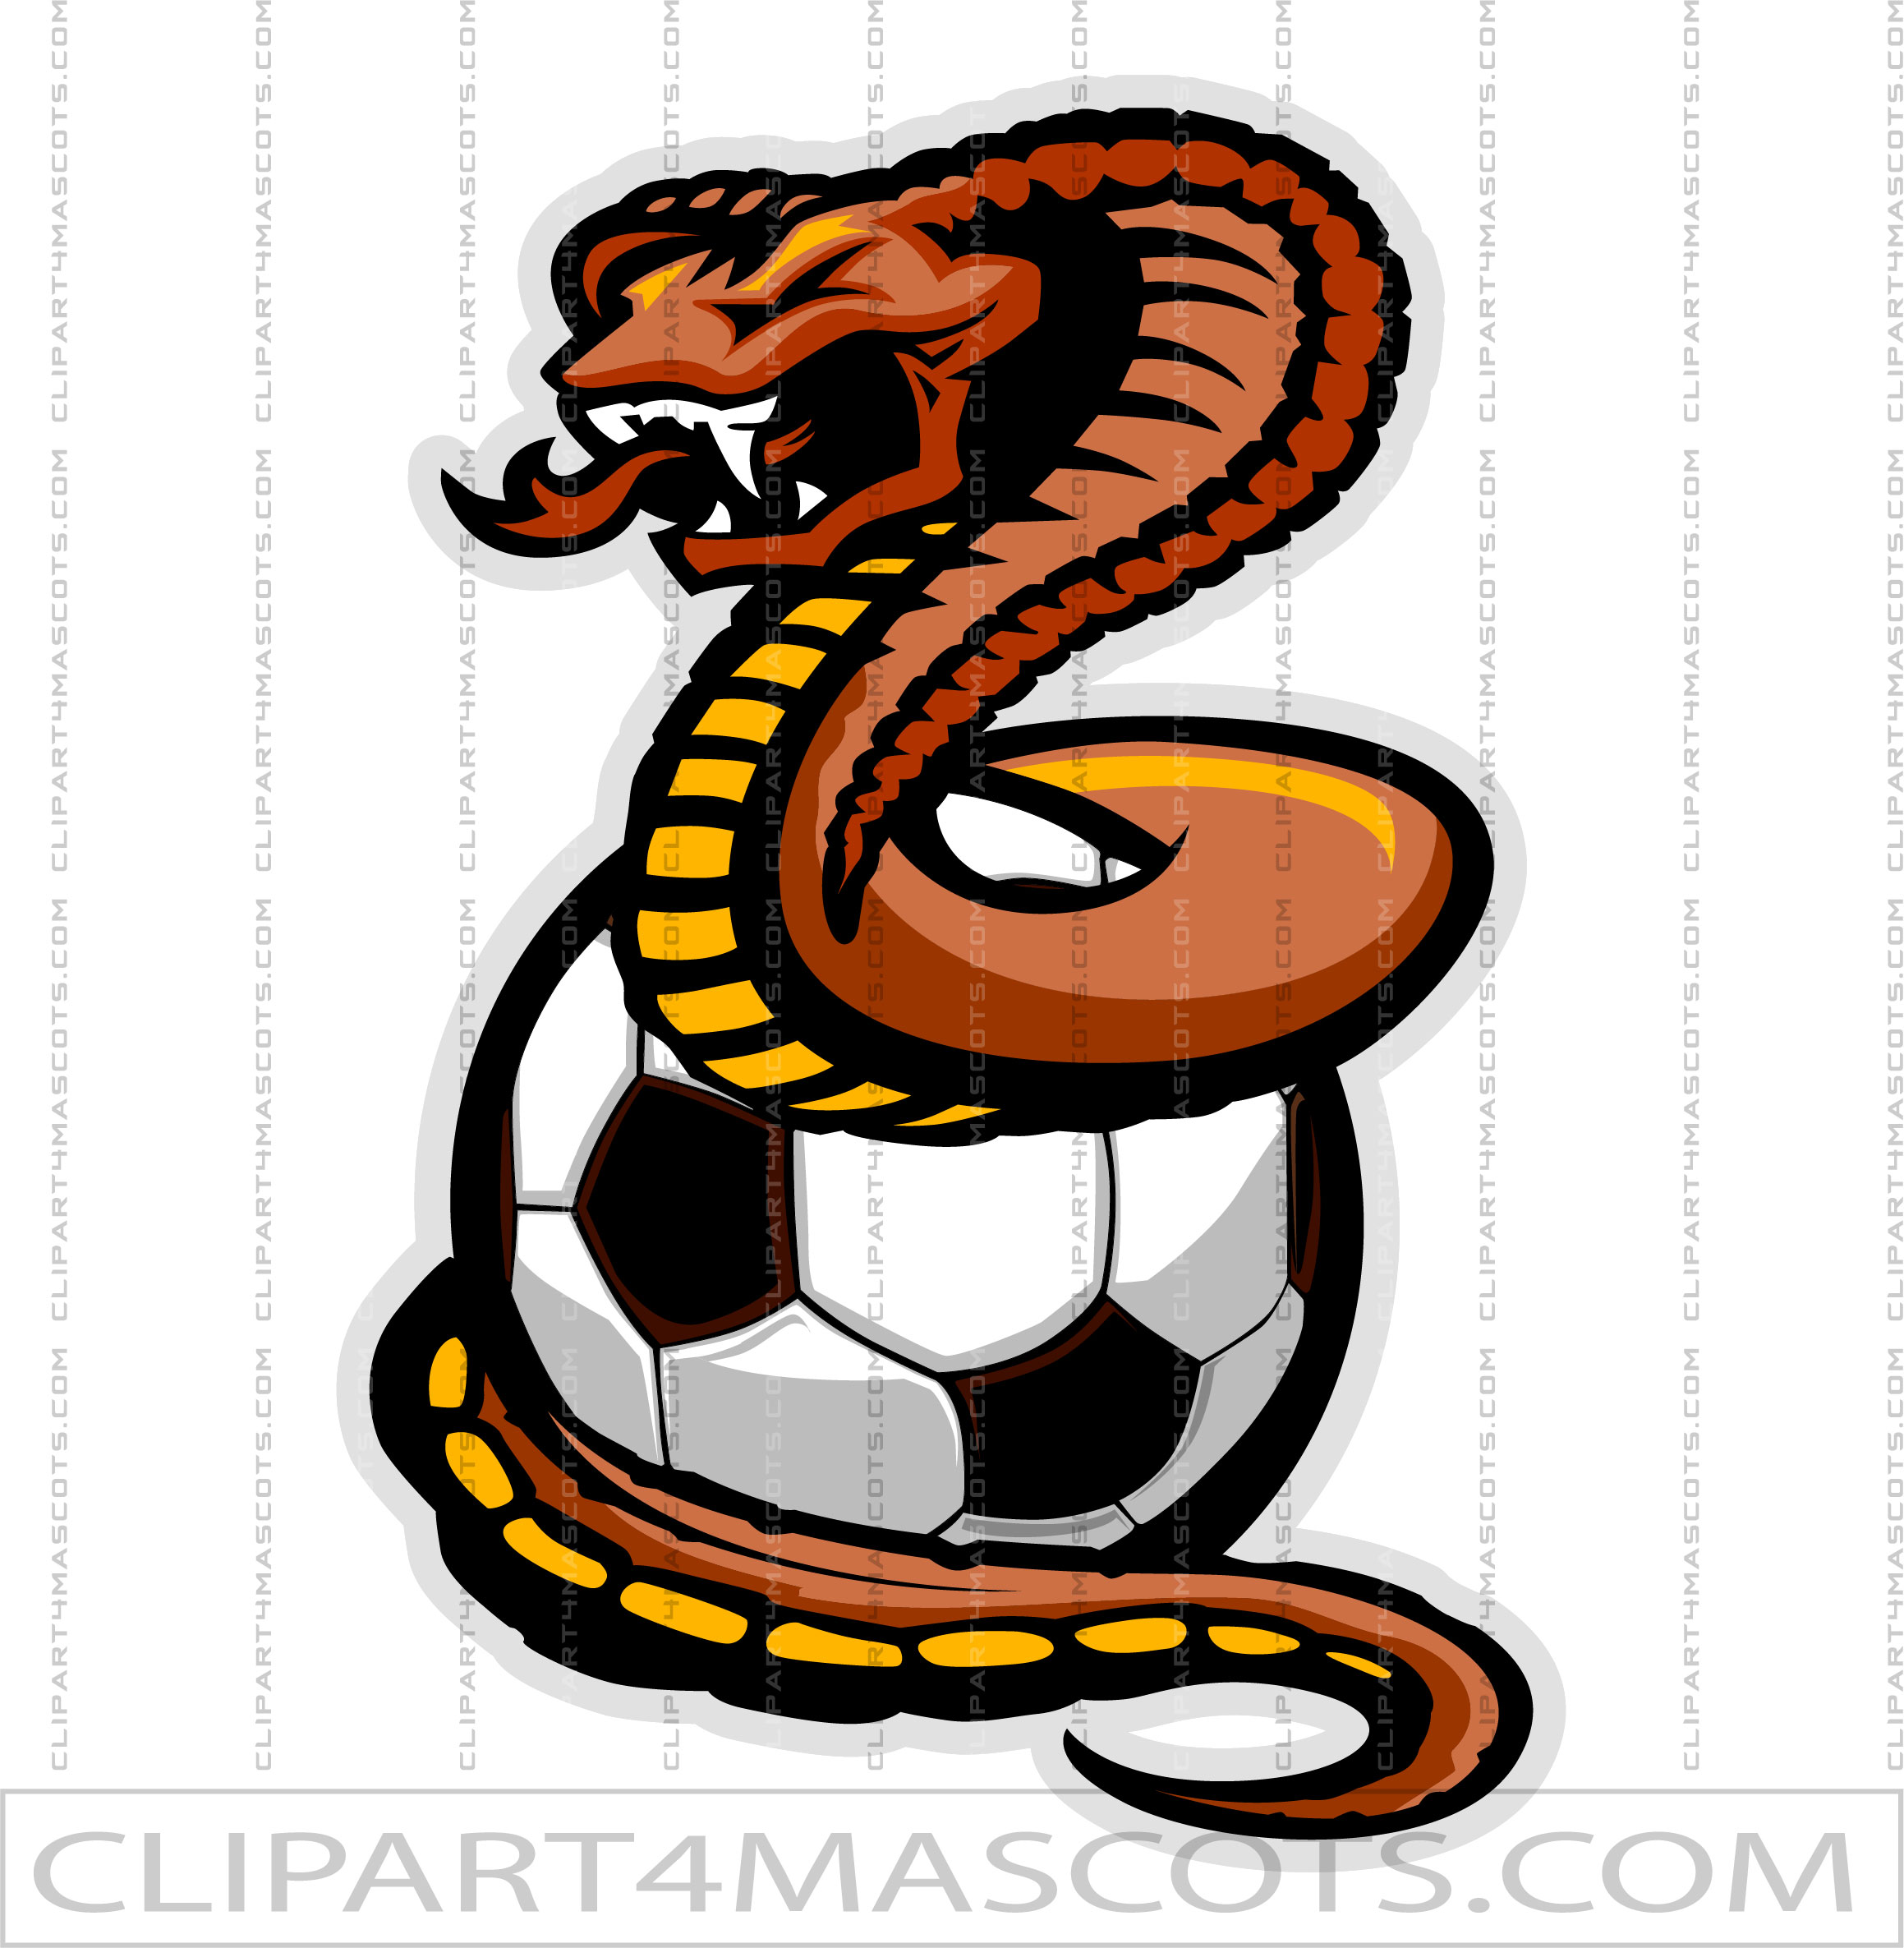 Cobras Soccer Team Logo